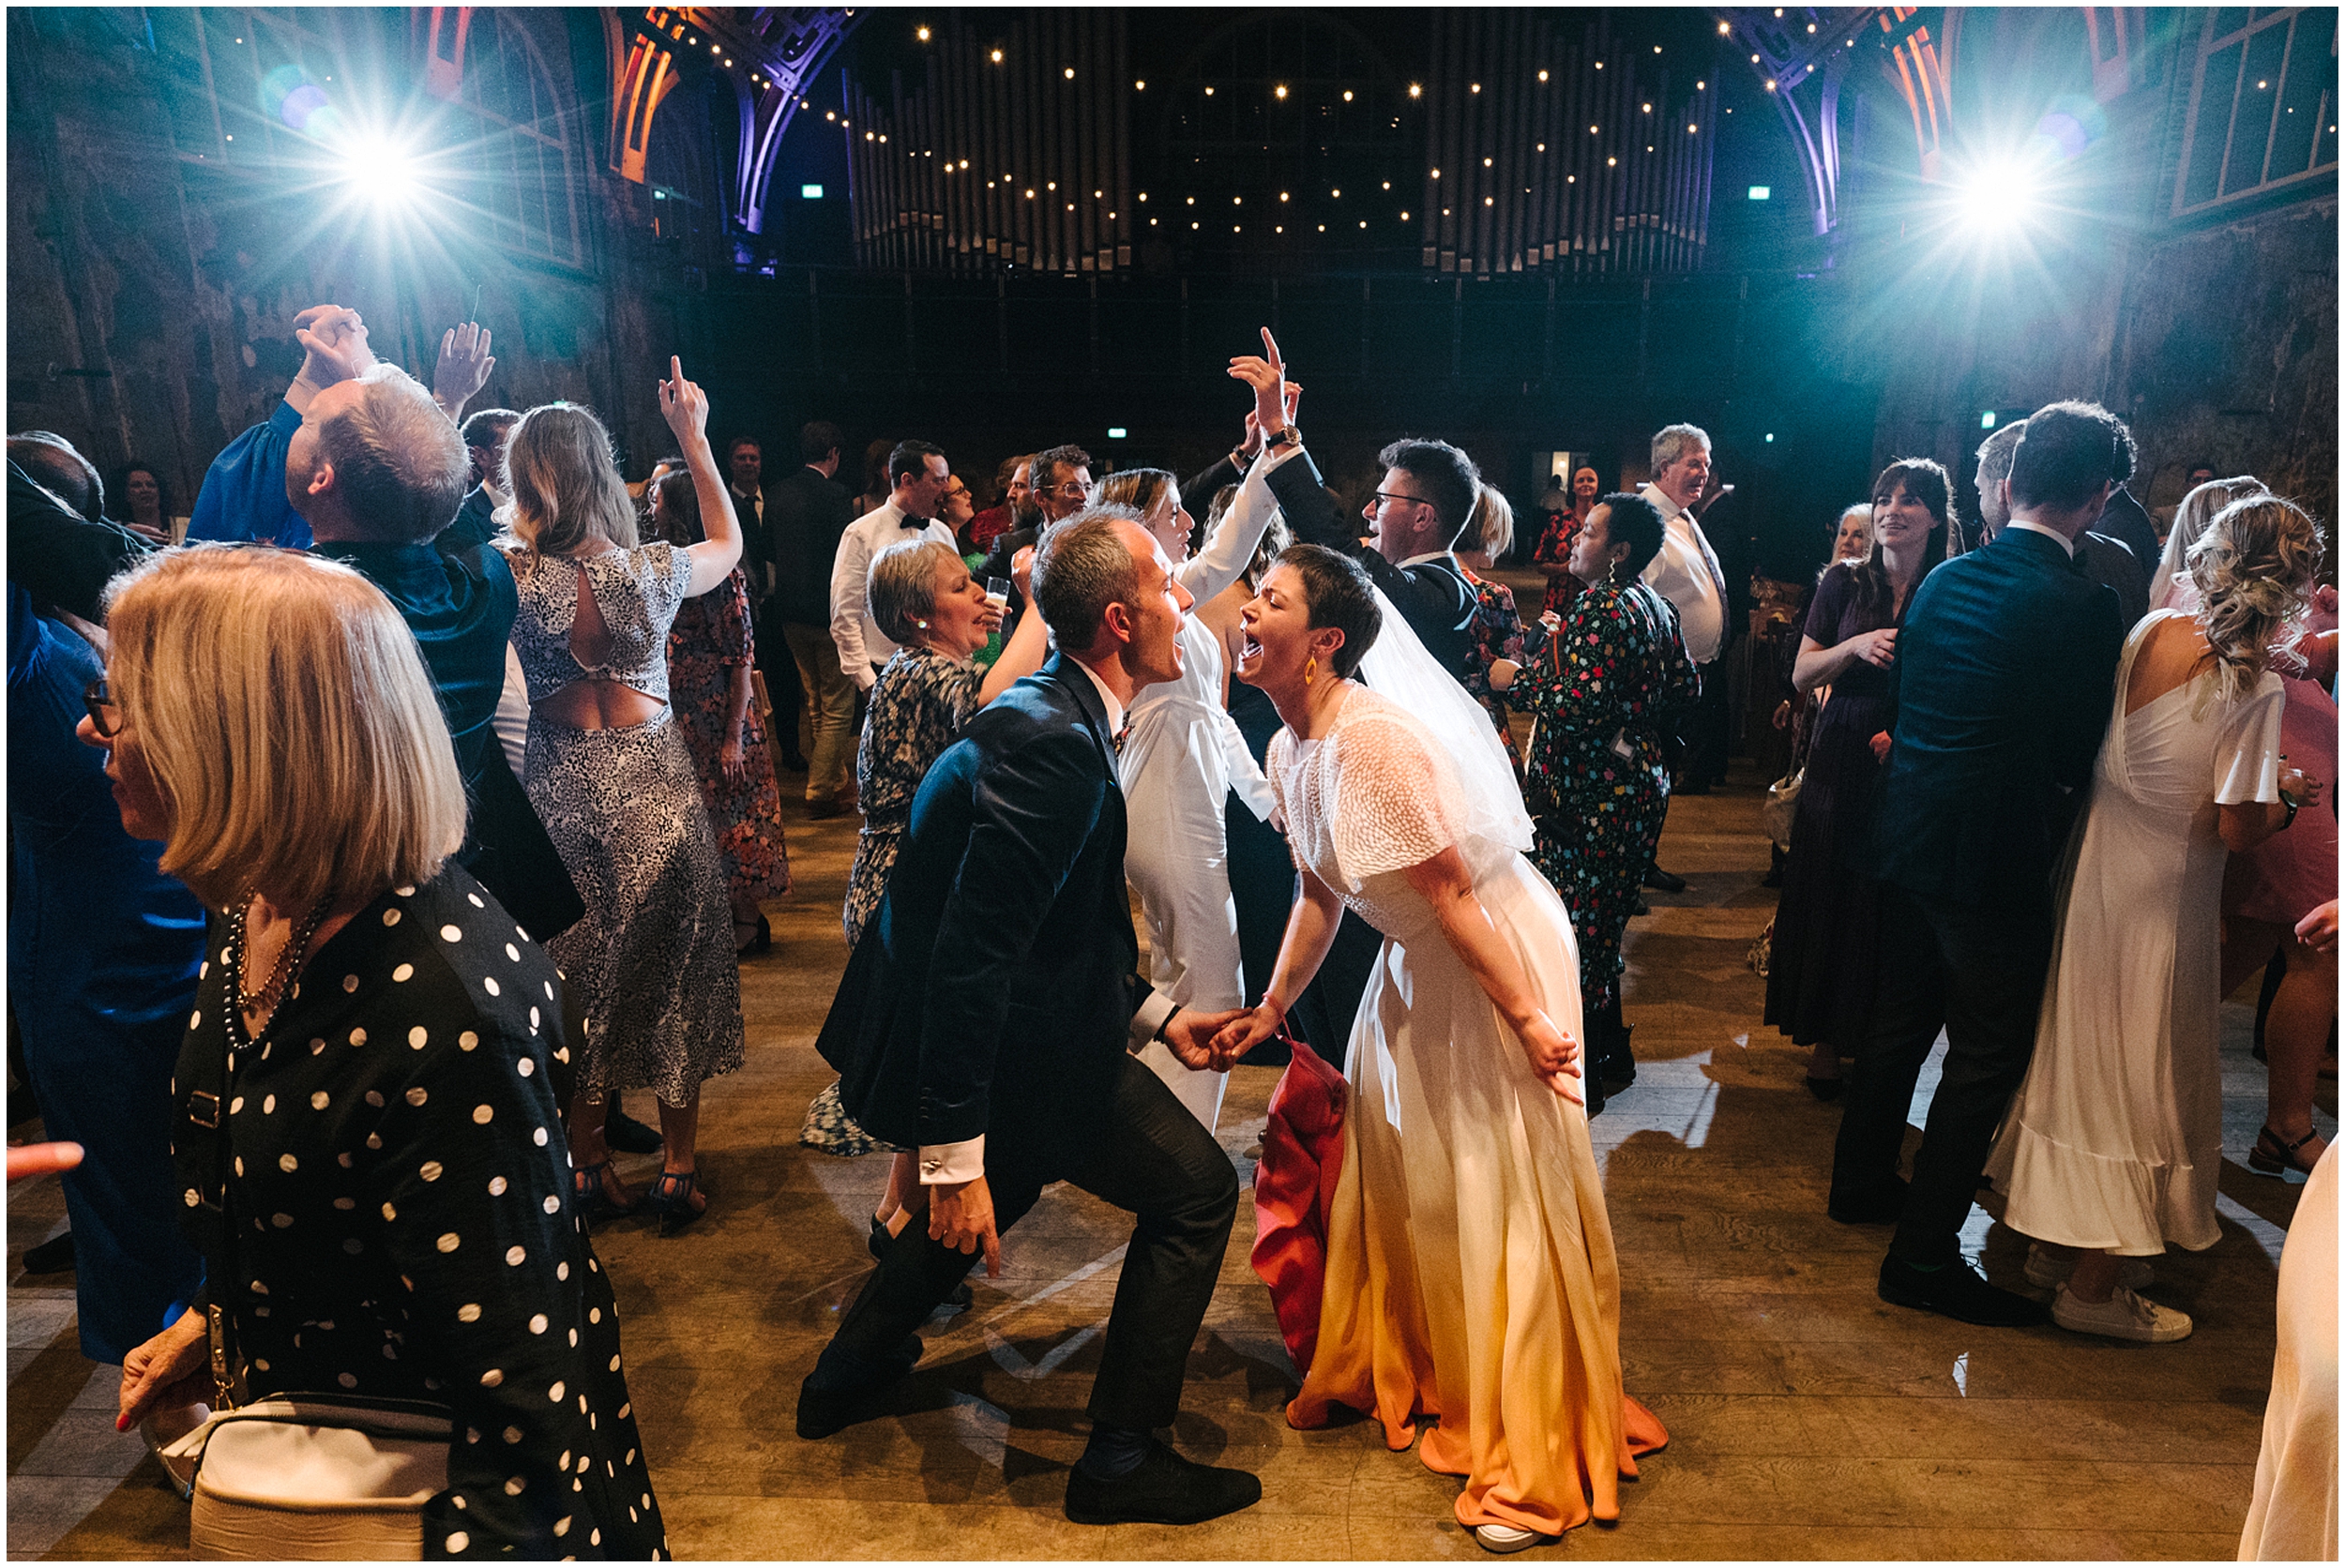 Wedding dancing at the Battersea Arts Centre.